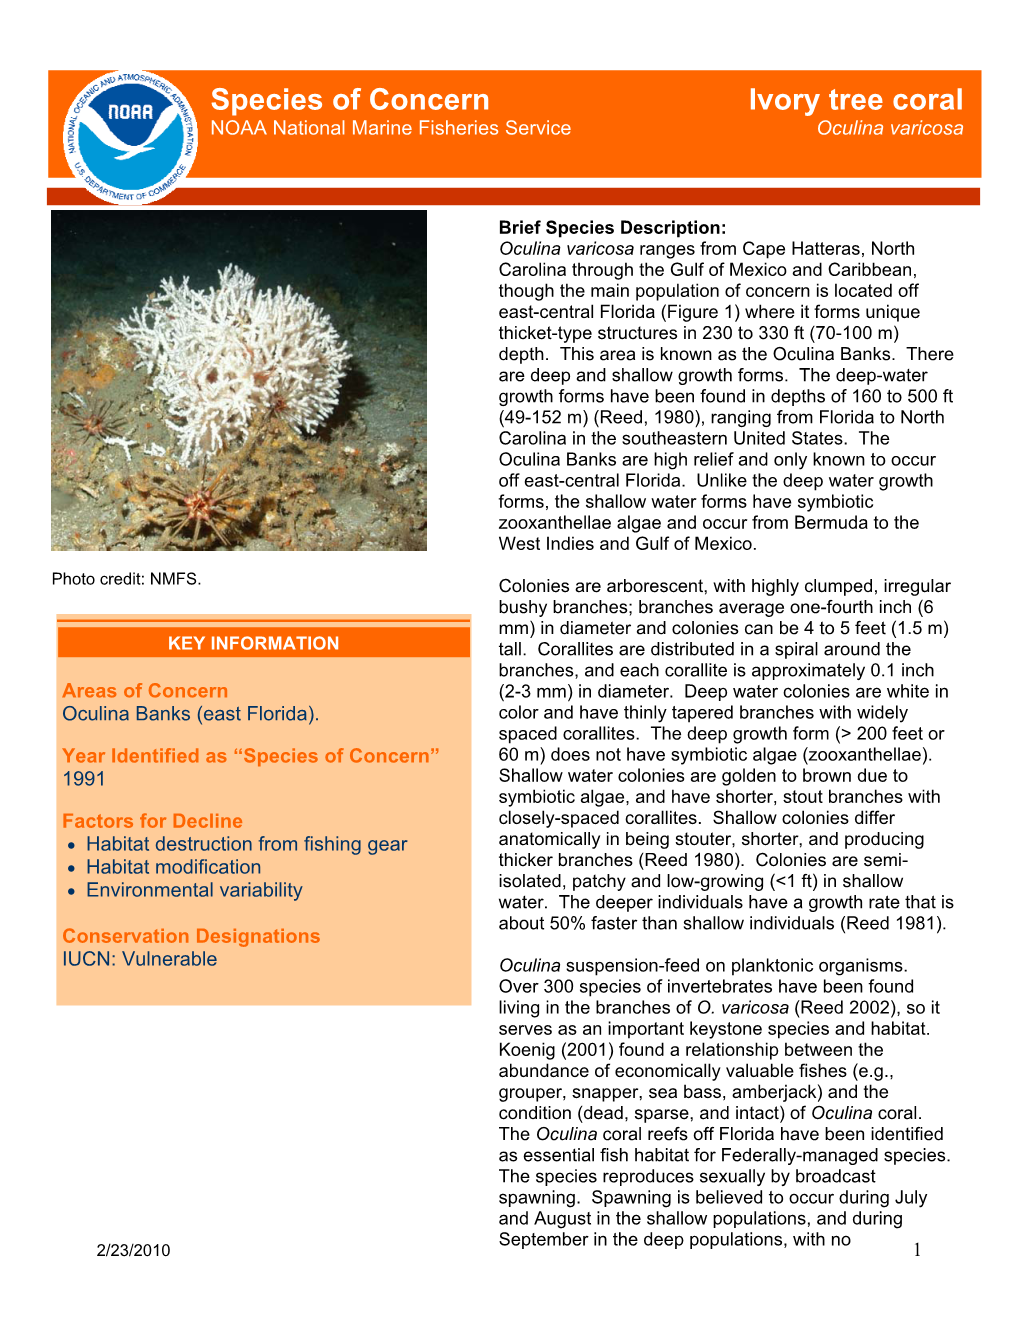 Ivory Tree Coral (Oculina Varicosa), Species of Concern, NOAA